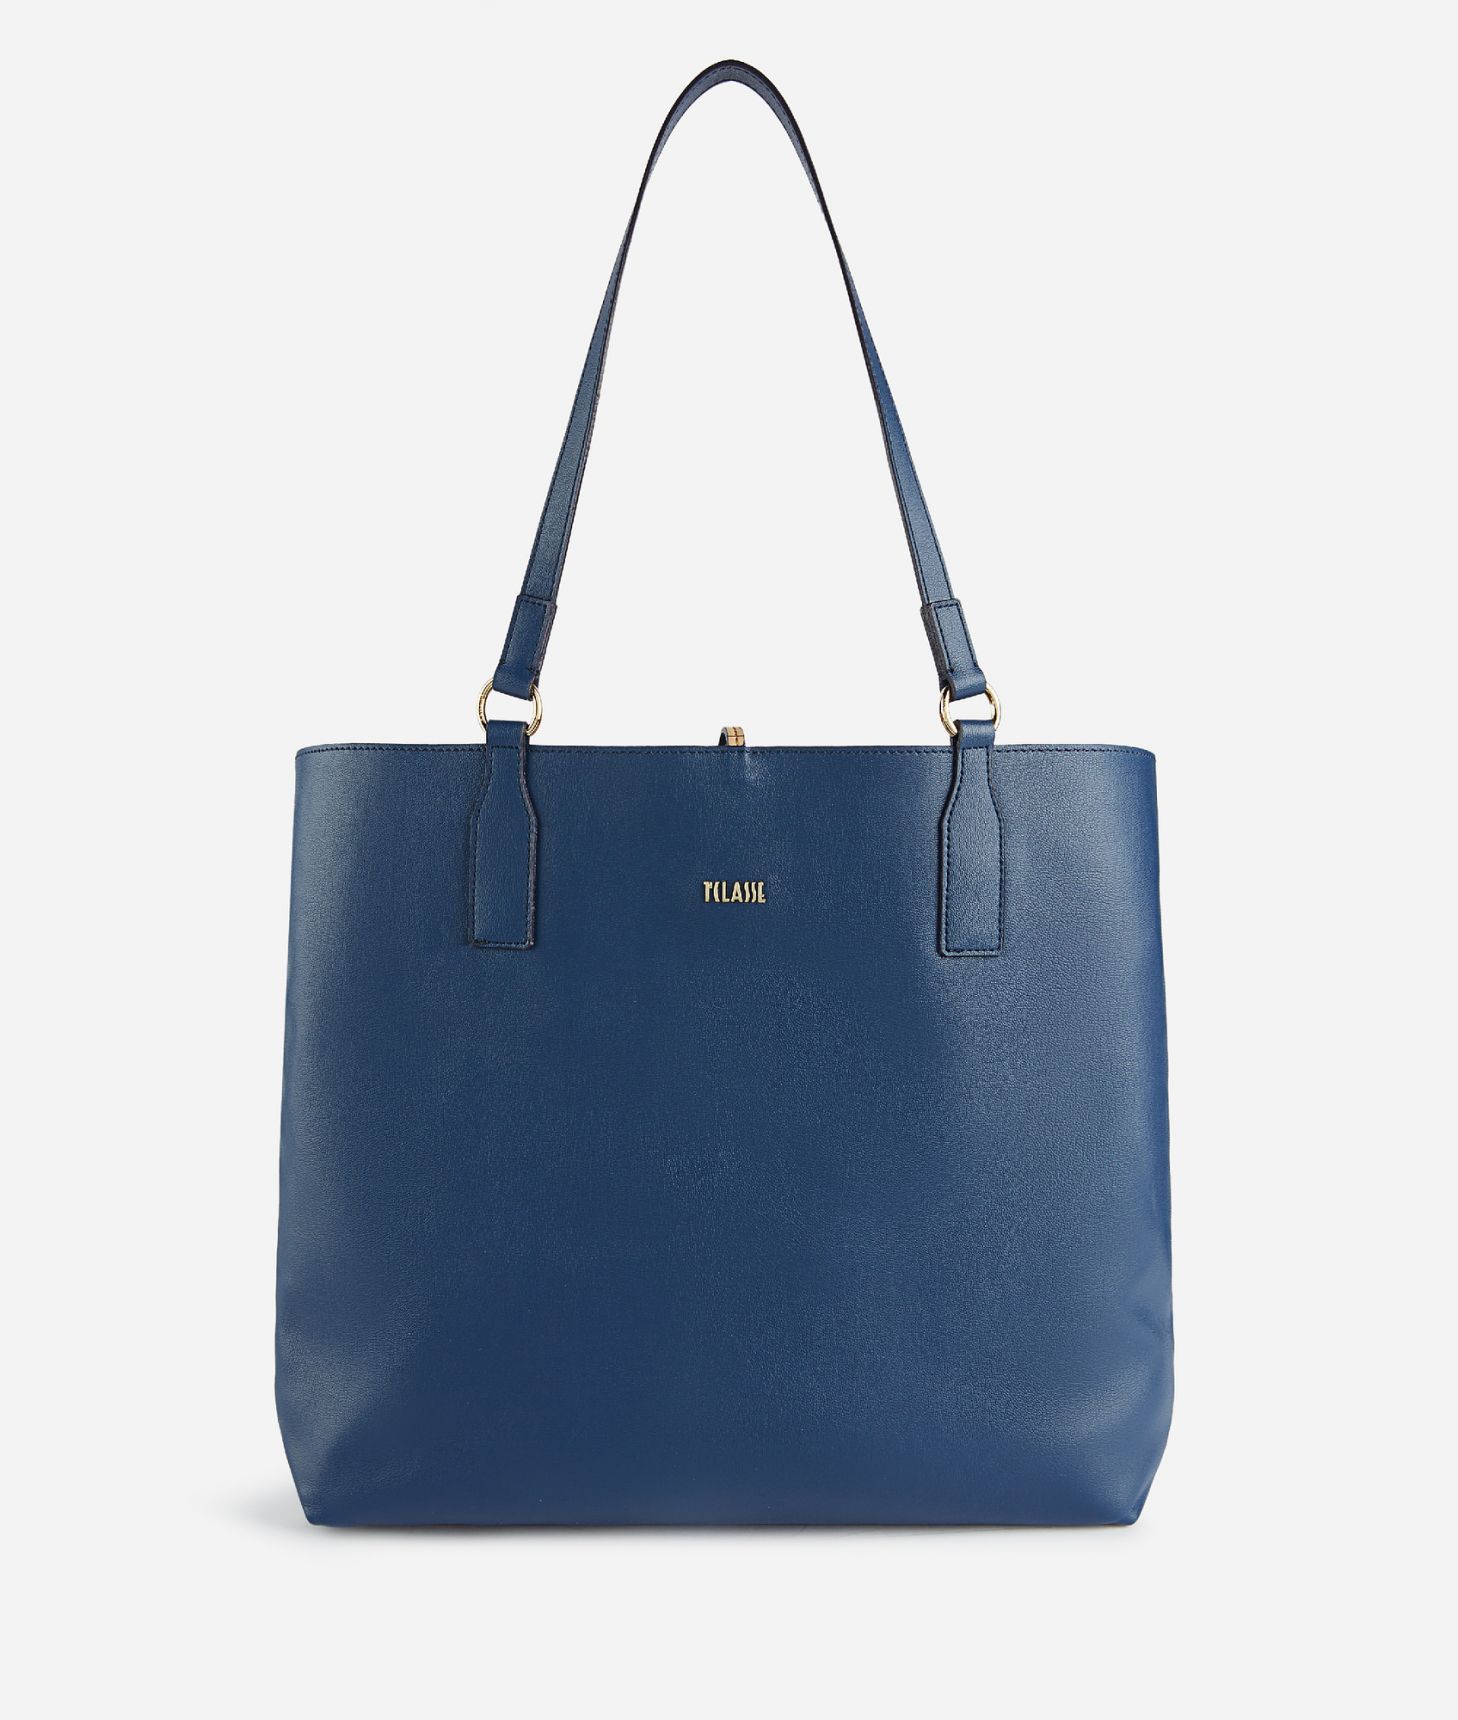 Two-Way Bag borsa shopping reversibile Blu Navy,front